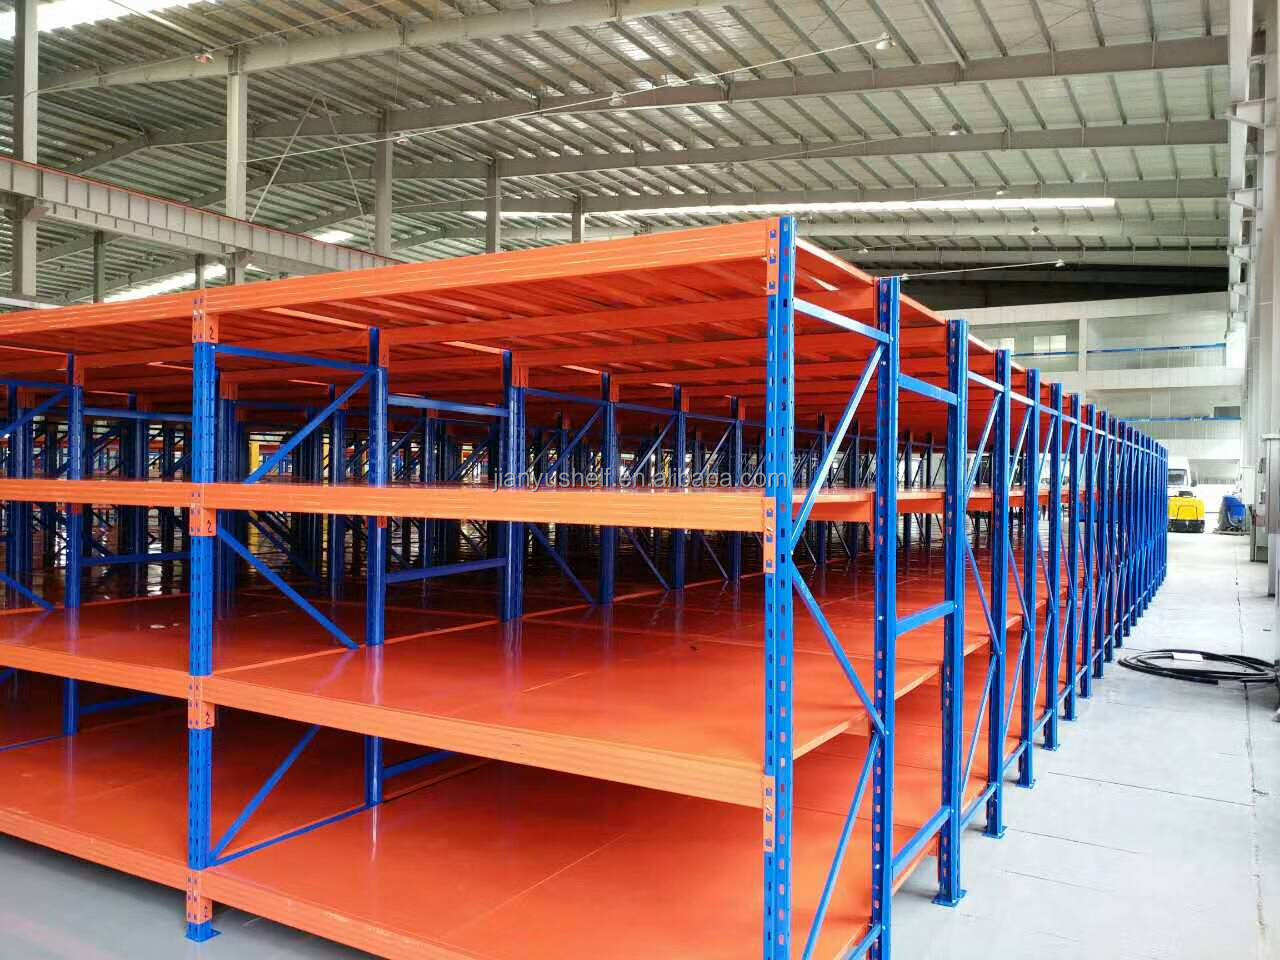 Fabriklager Lagerung Hochleistungs-Selektivstahl-Palettenregalsystem Selektive Industrielagerregalfabrik